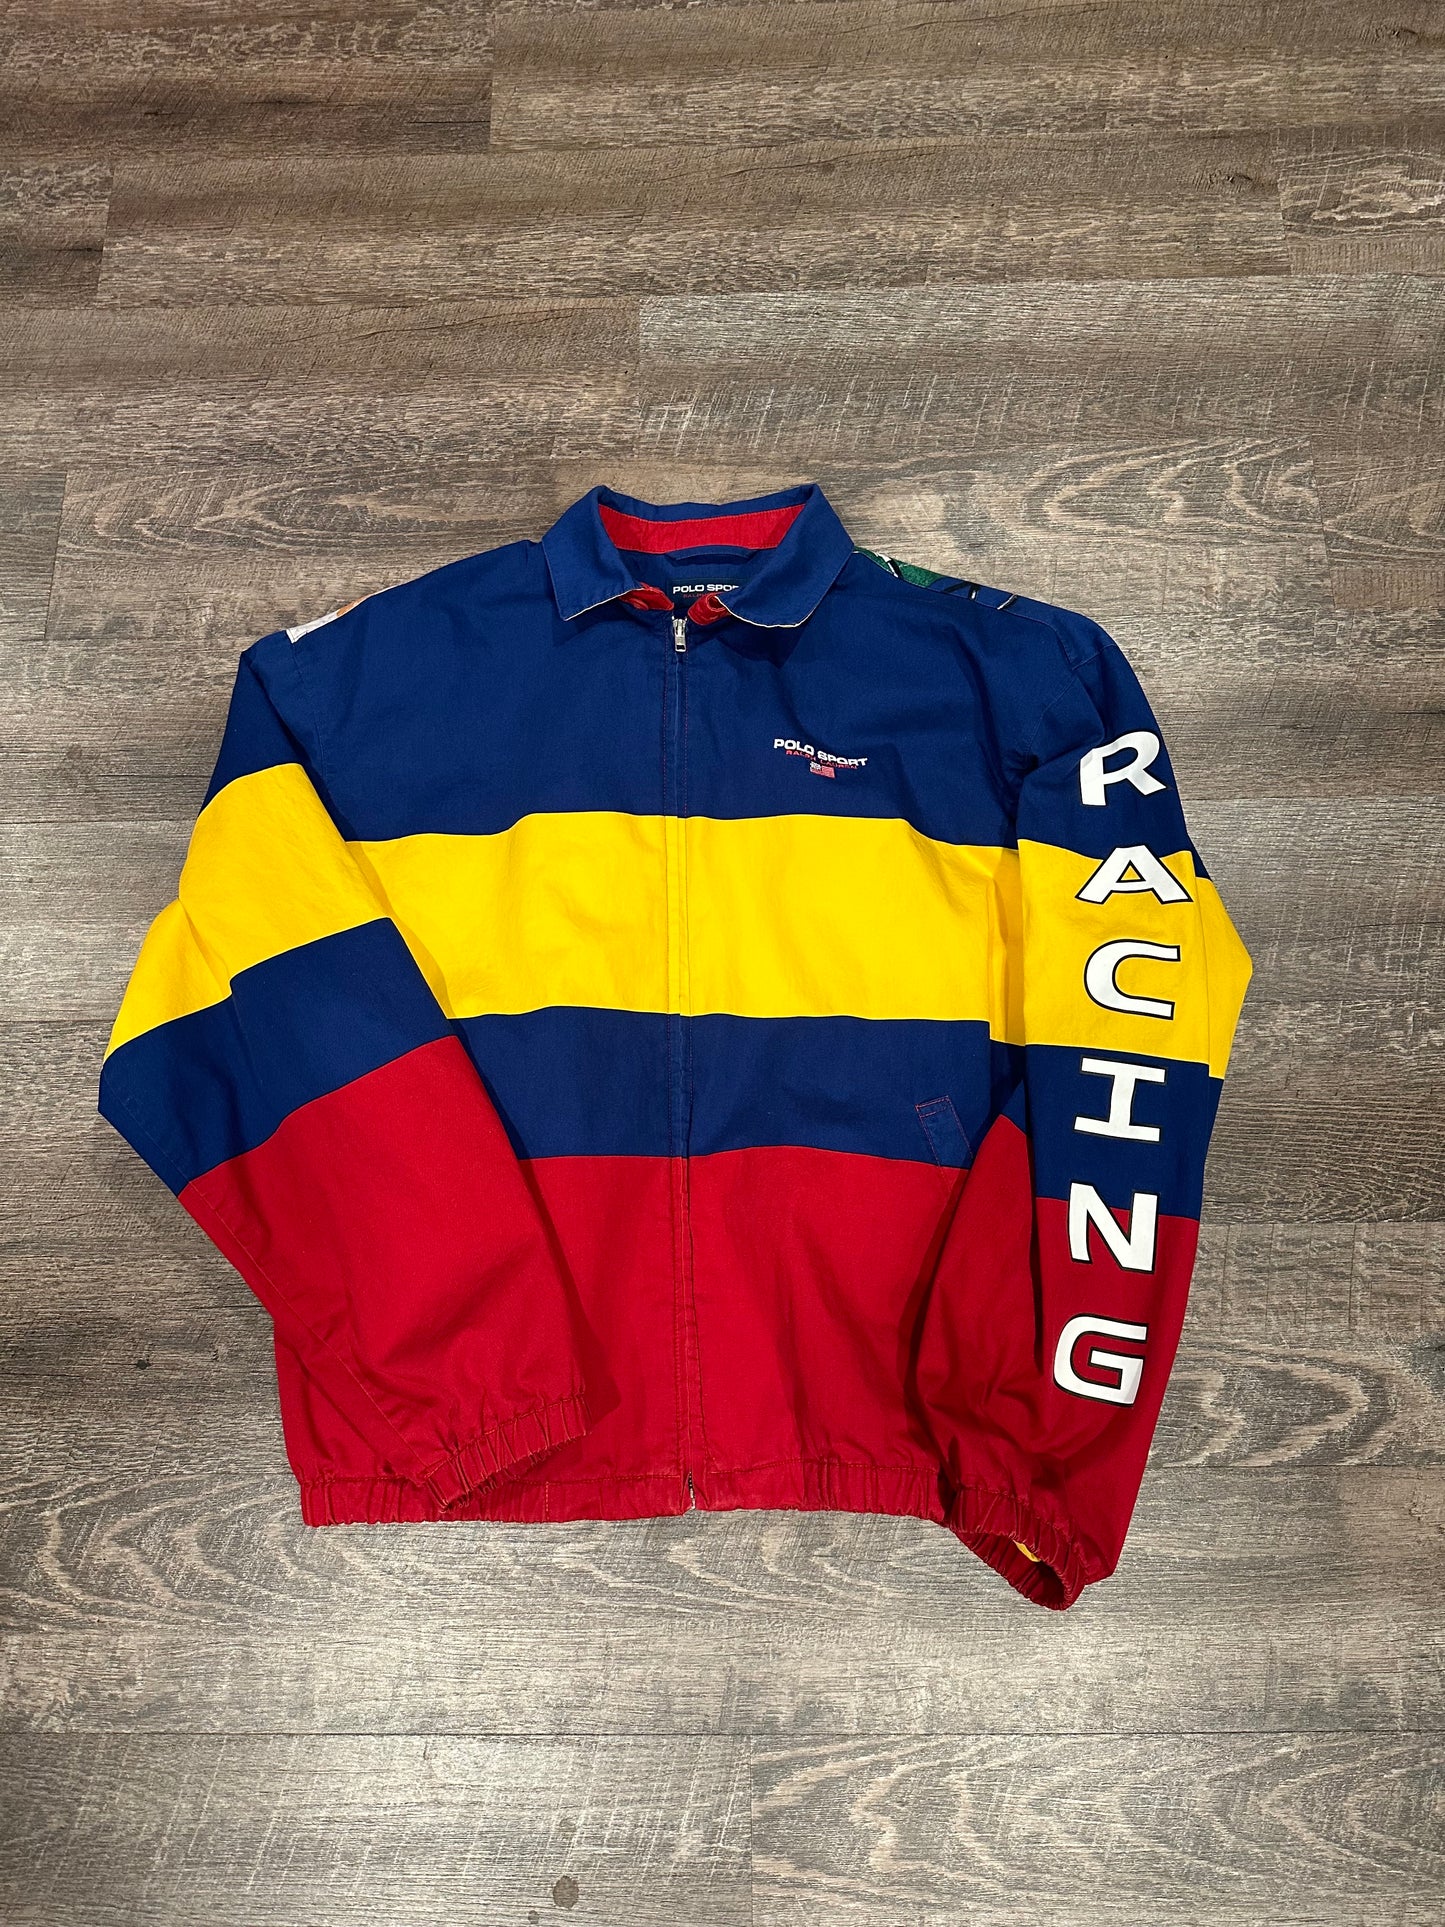 Polo Ralph Lauren Cycling Jacket